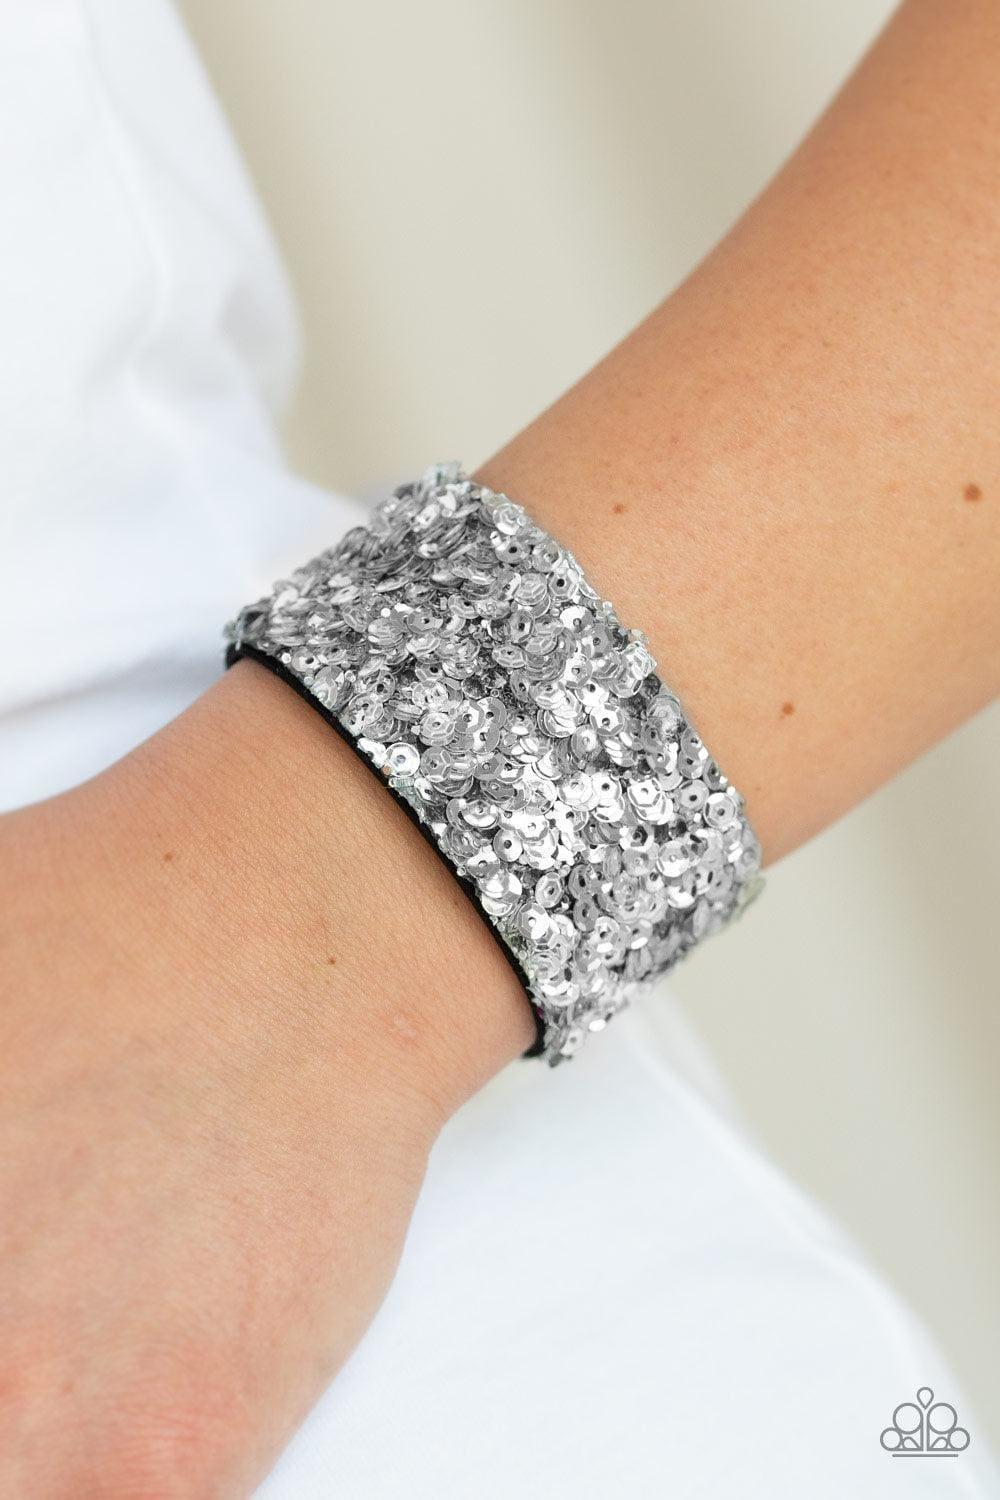 Paparazzi Accessories - Starry Sequins - Silver Snap Bracelet - Bling by JessieK